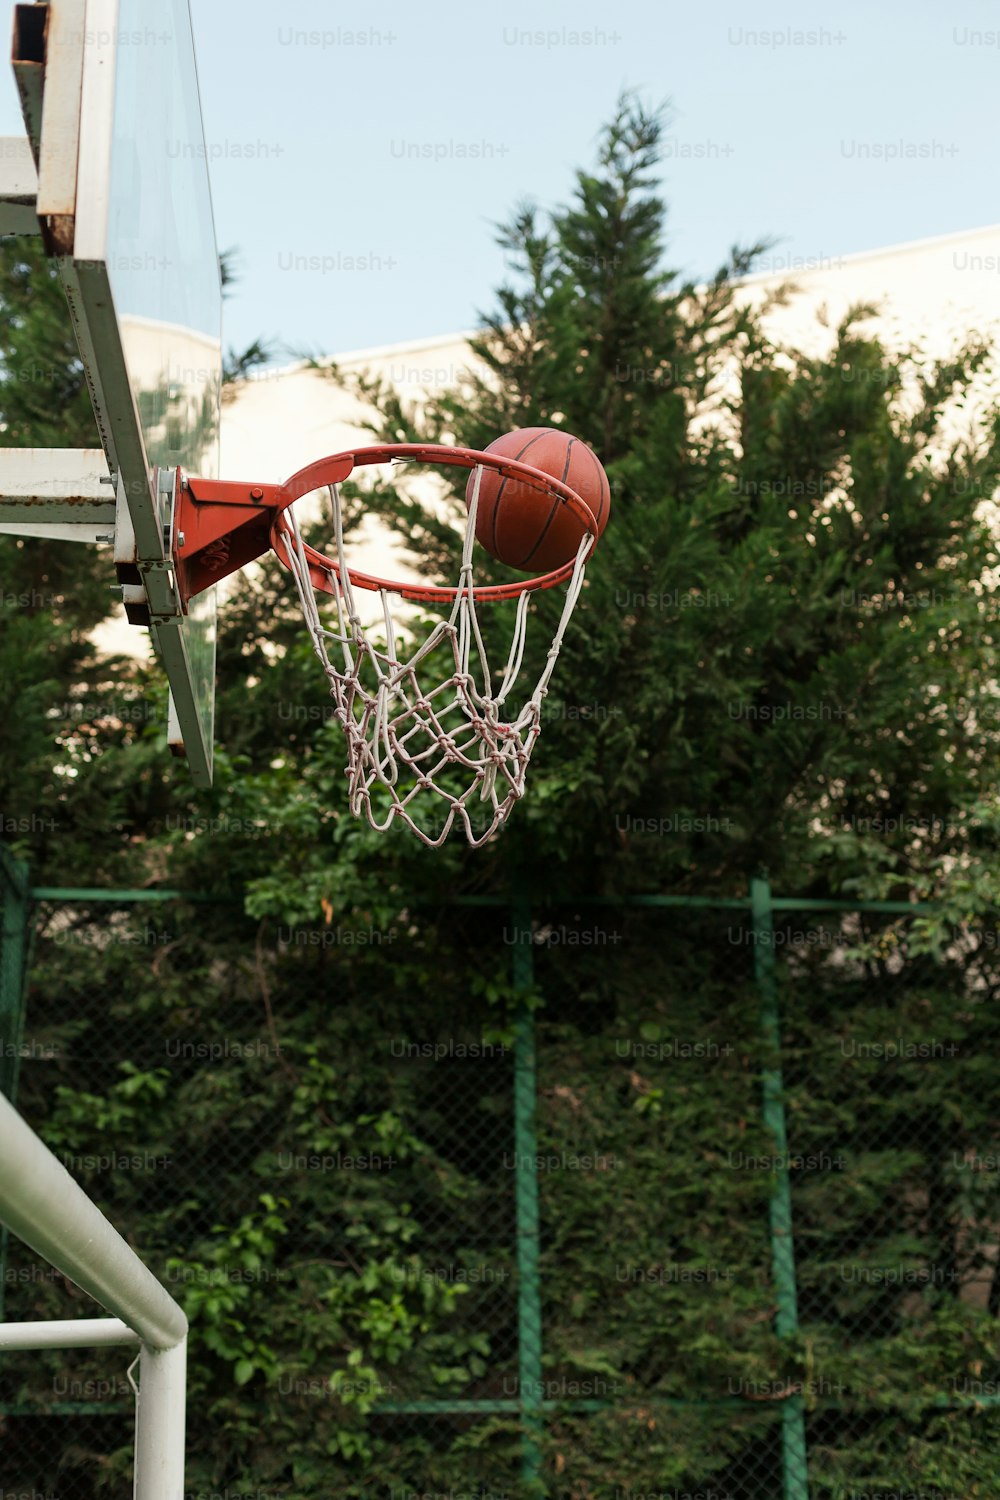 Una pelota de baloncesto atravesando la red de un aro de baloncesto